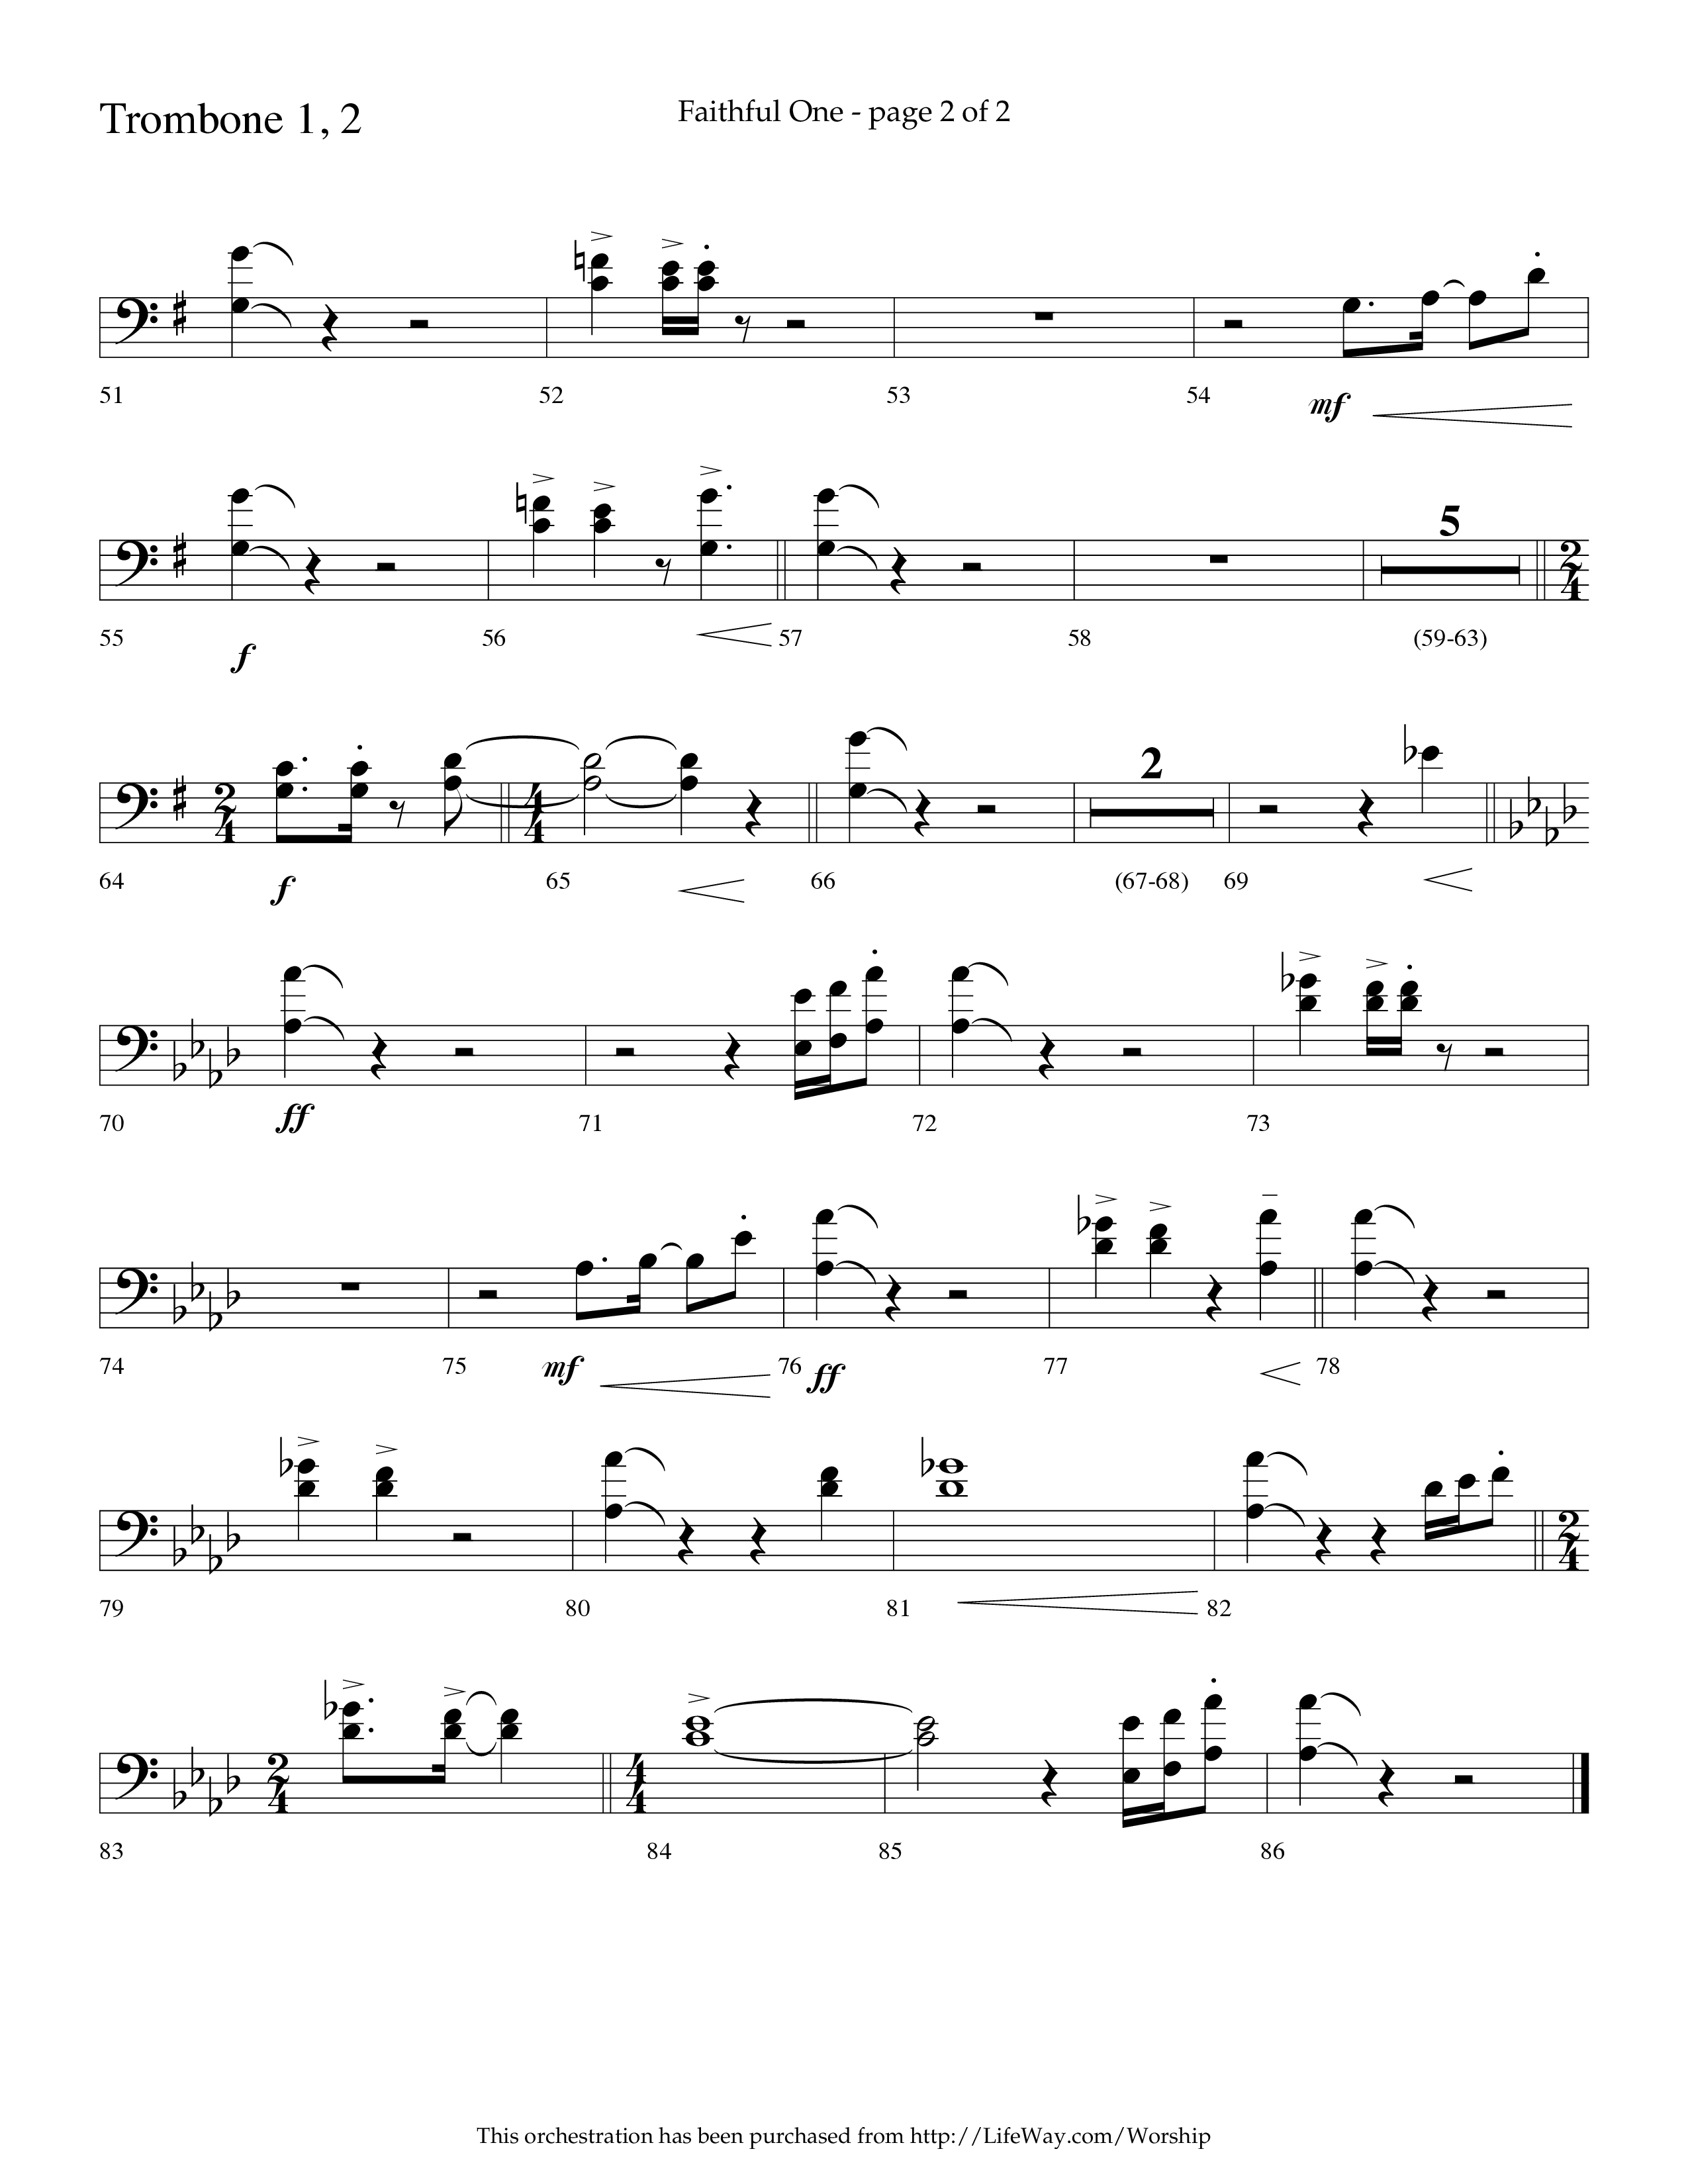 Faithful One (Choral Anthem SATB) Trombone 1/2 (Lifeway Choral / Arr. Cliff Duren)